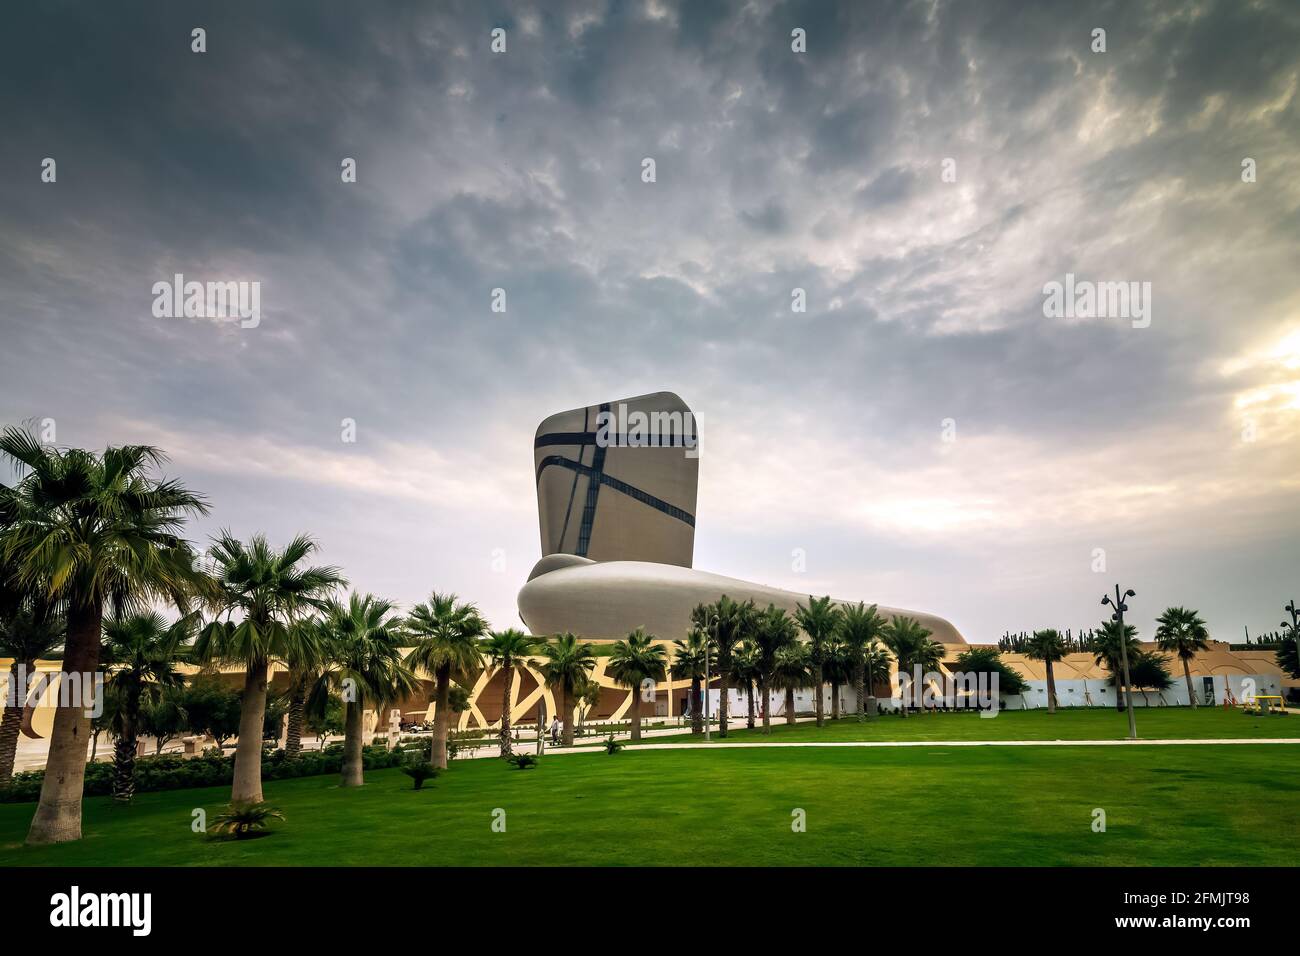 King Abdulaziz Centro para la Cultura Mundial (Ithra) Ciudad :Dammam, País : Arabia Saudita. Foto de stock